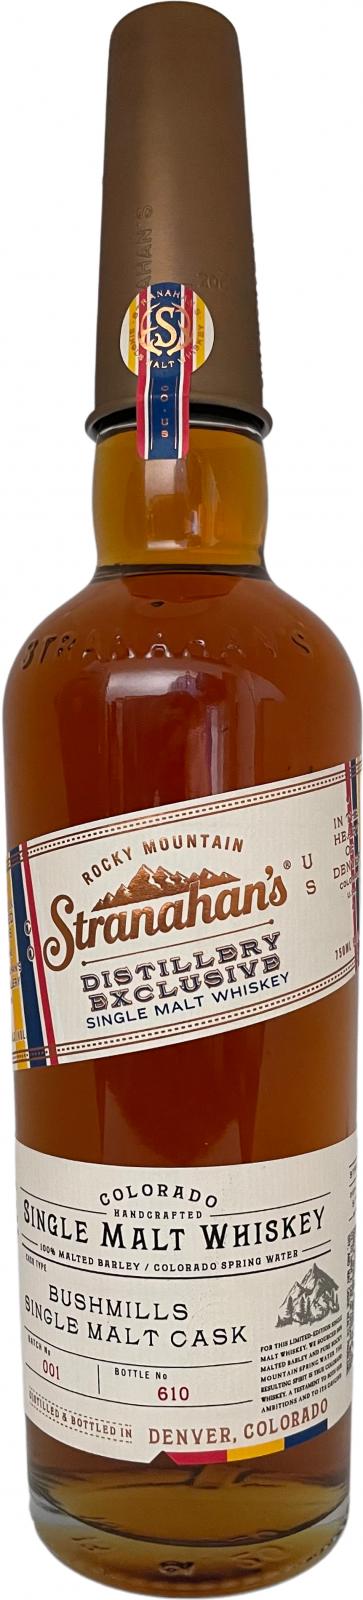 Stranahan's Single Malt Whisky The Distiller's Experimental Series Bushmills Cask 47% 750ml